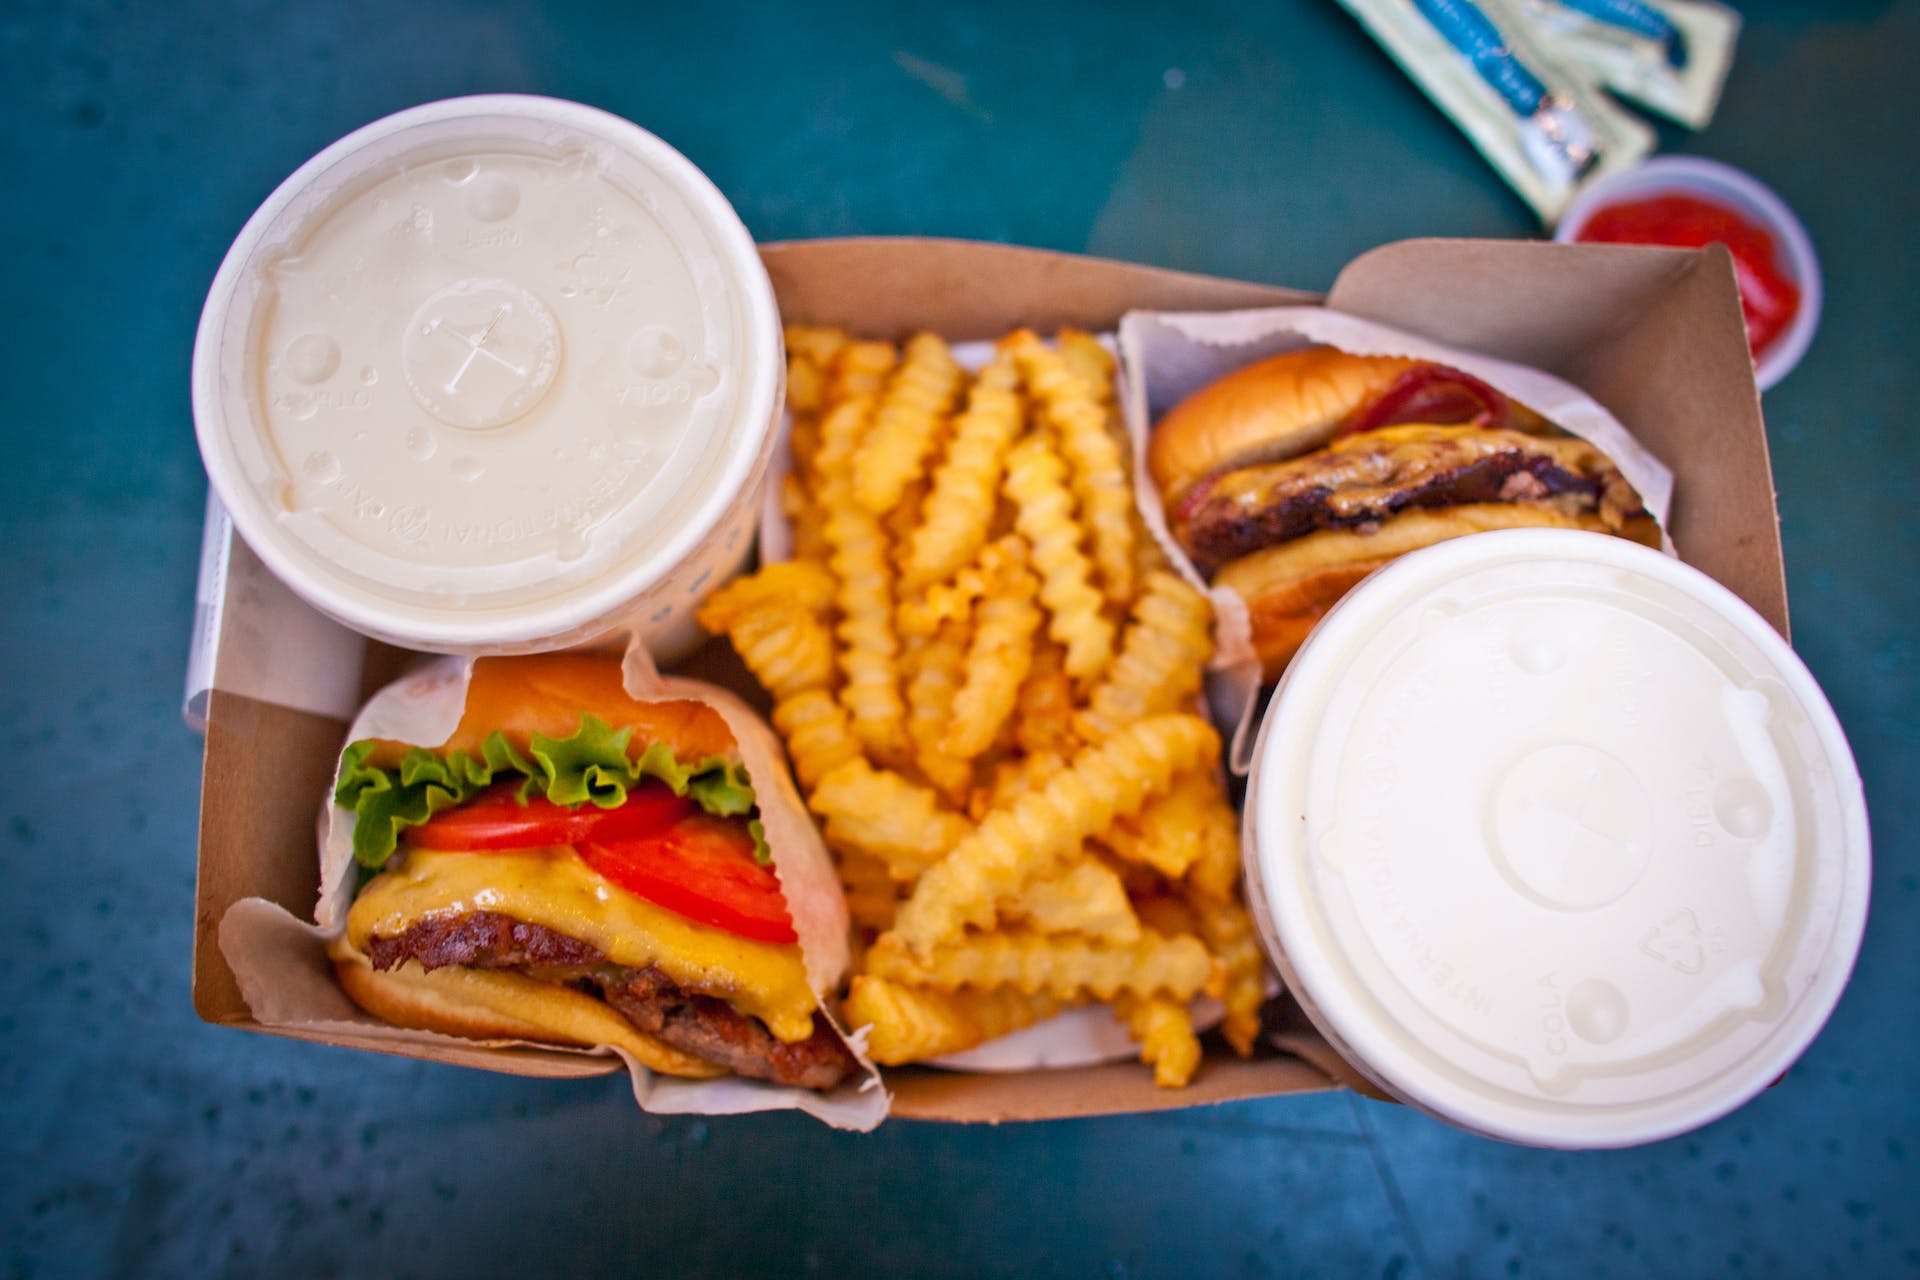 Burgers and fries | Source: Pexels